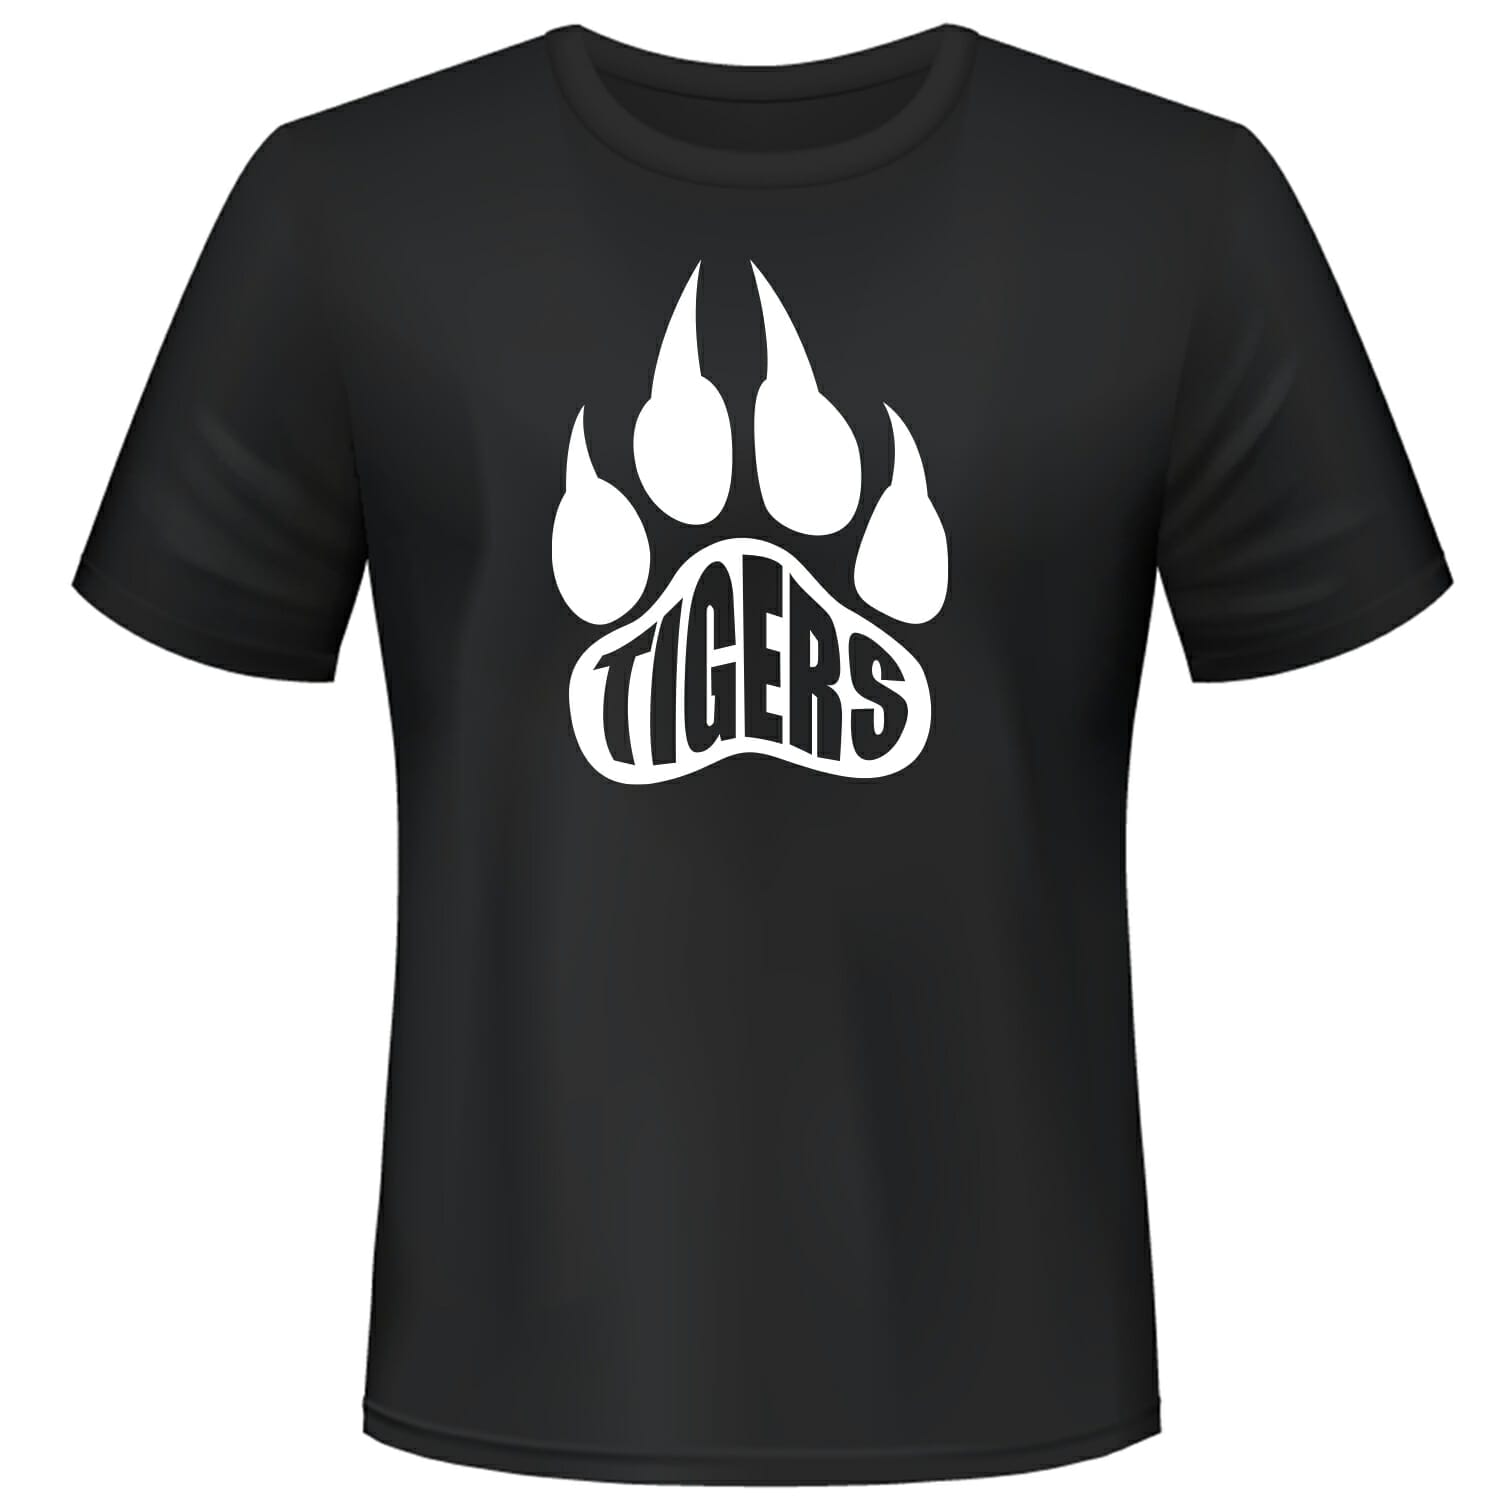 Tigers Team logo T shirt design